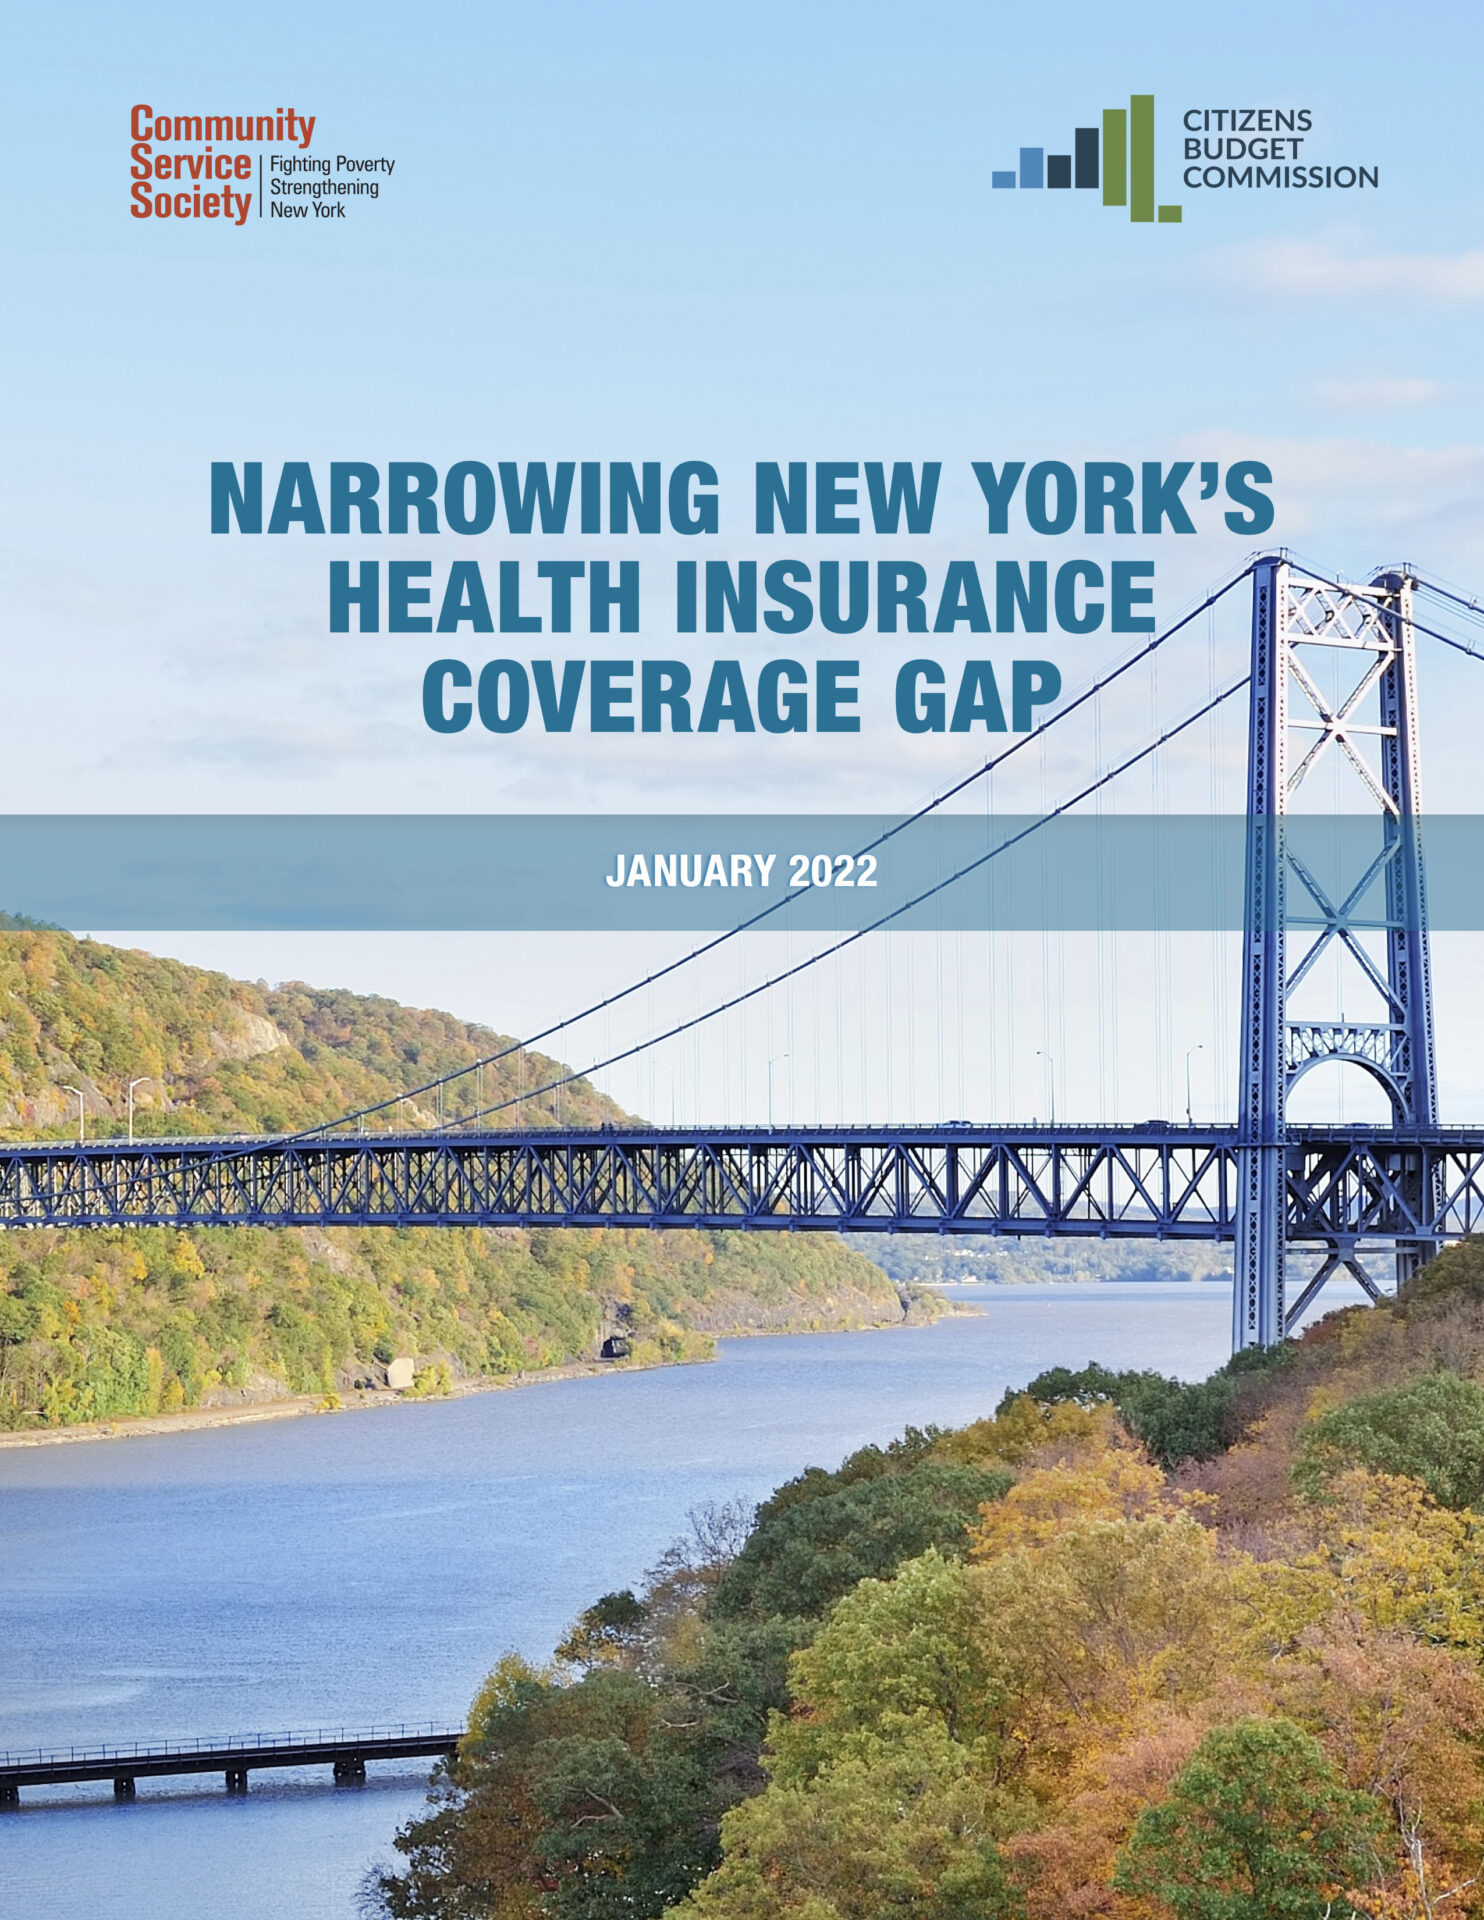 Narrowing New York's Health Insurance Gap